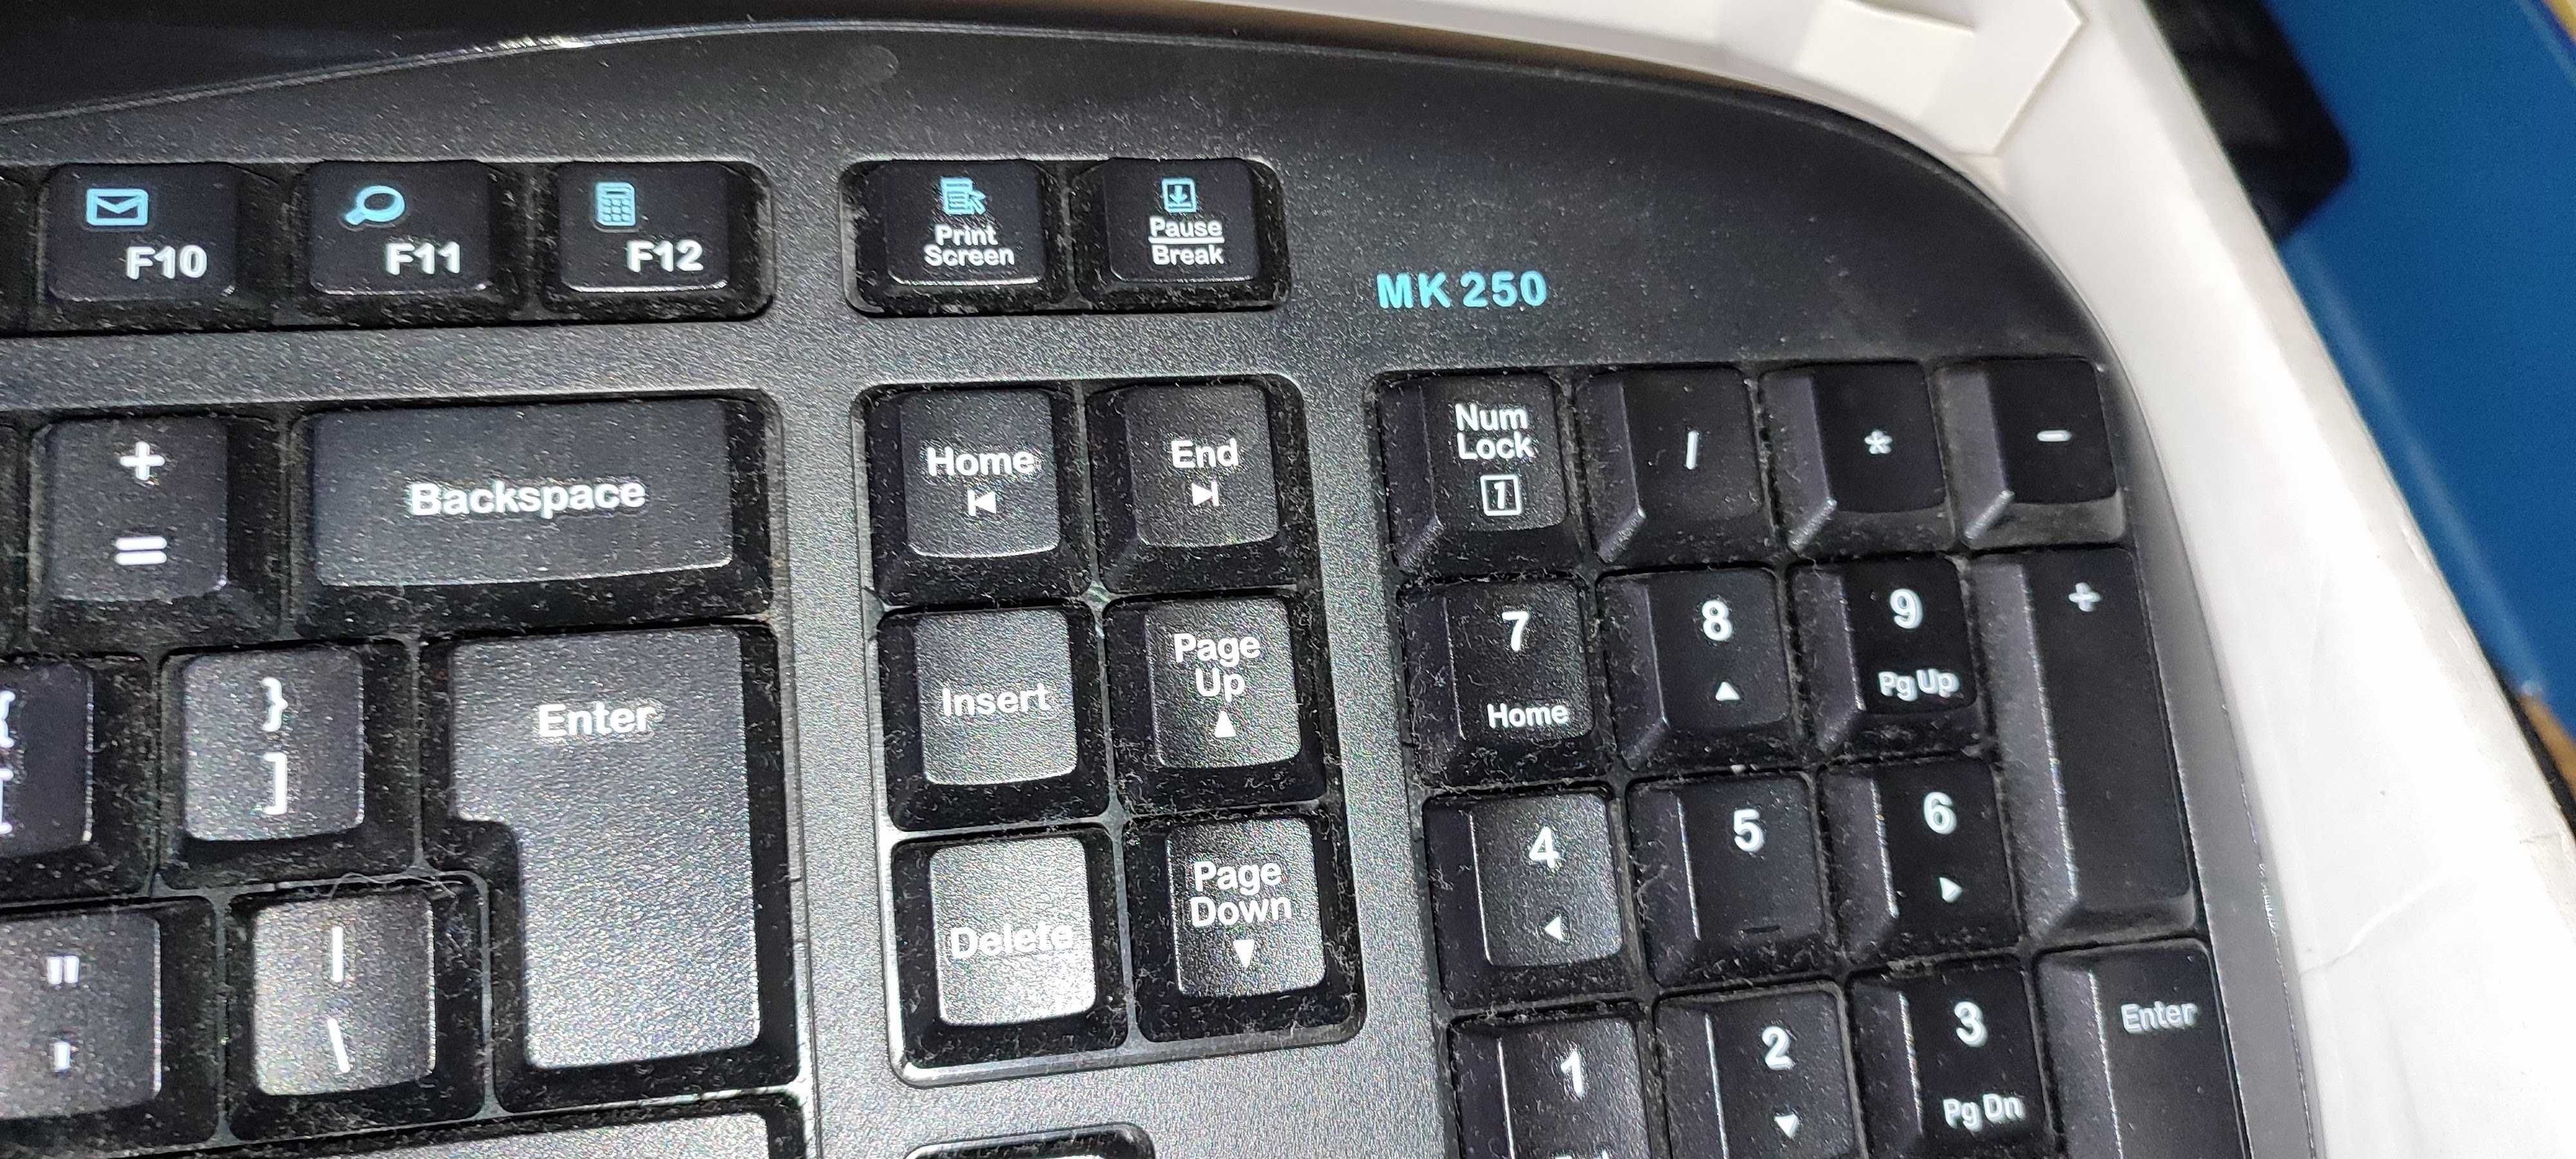 Tastatura Logitech wireless Desktop MK250